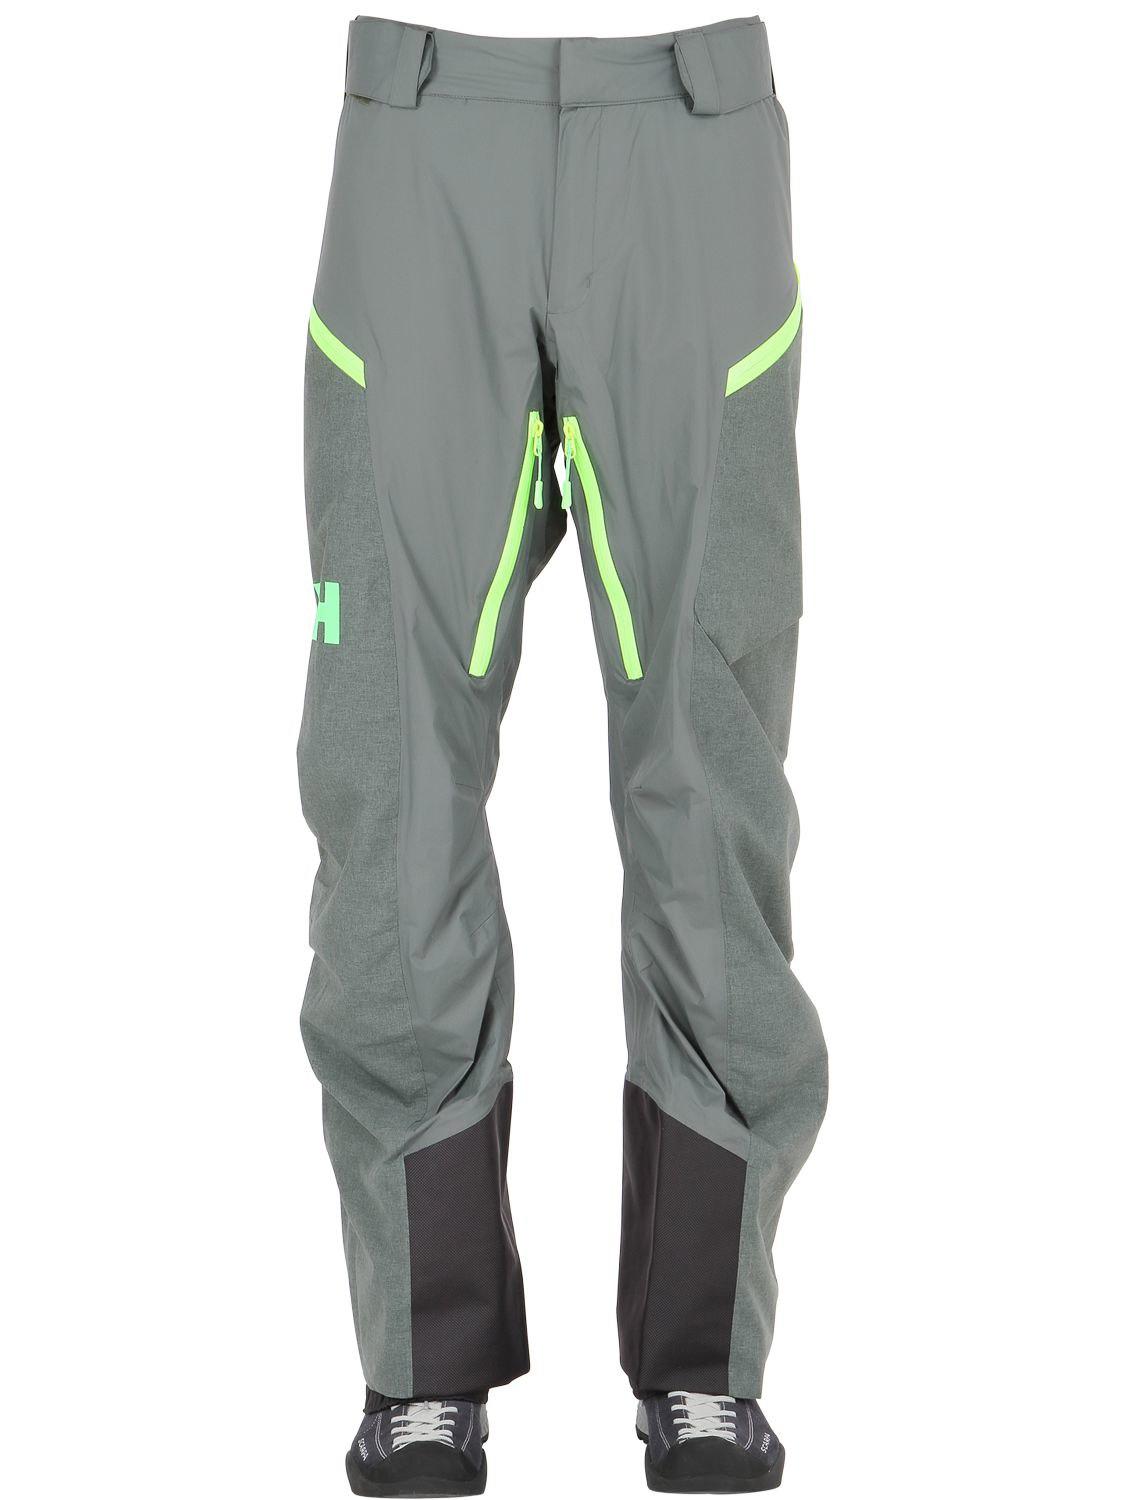 Helly Hansen Backbowl Cargo Primaloft Ski Pants in Army Green (Green) for  Men - Lyst